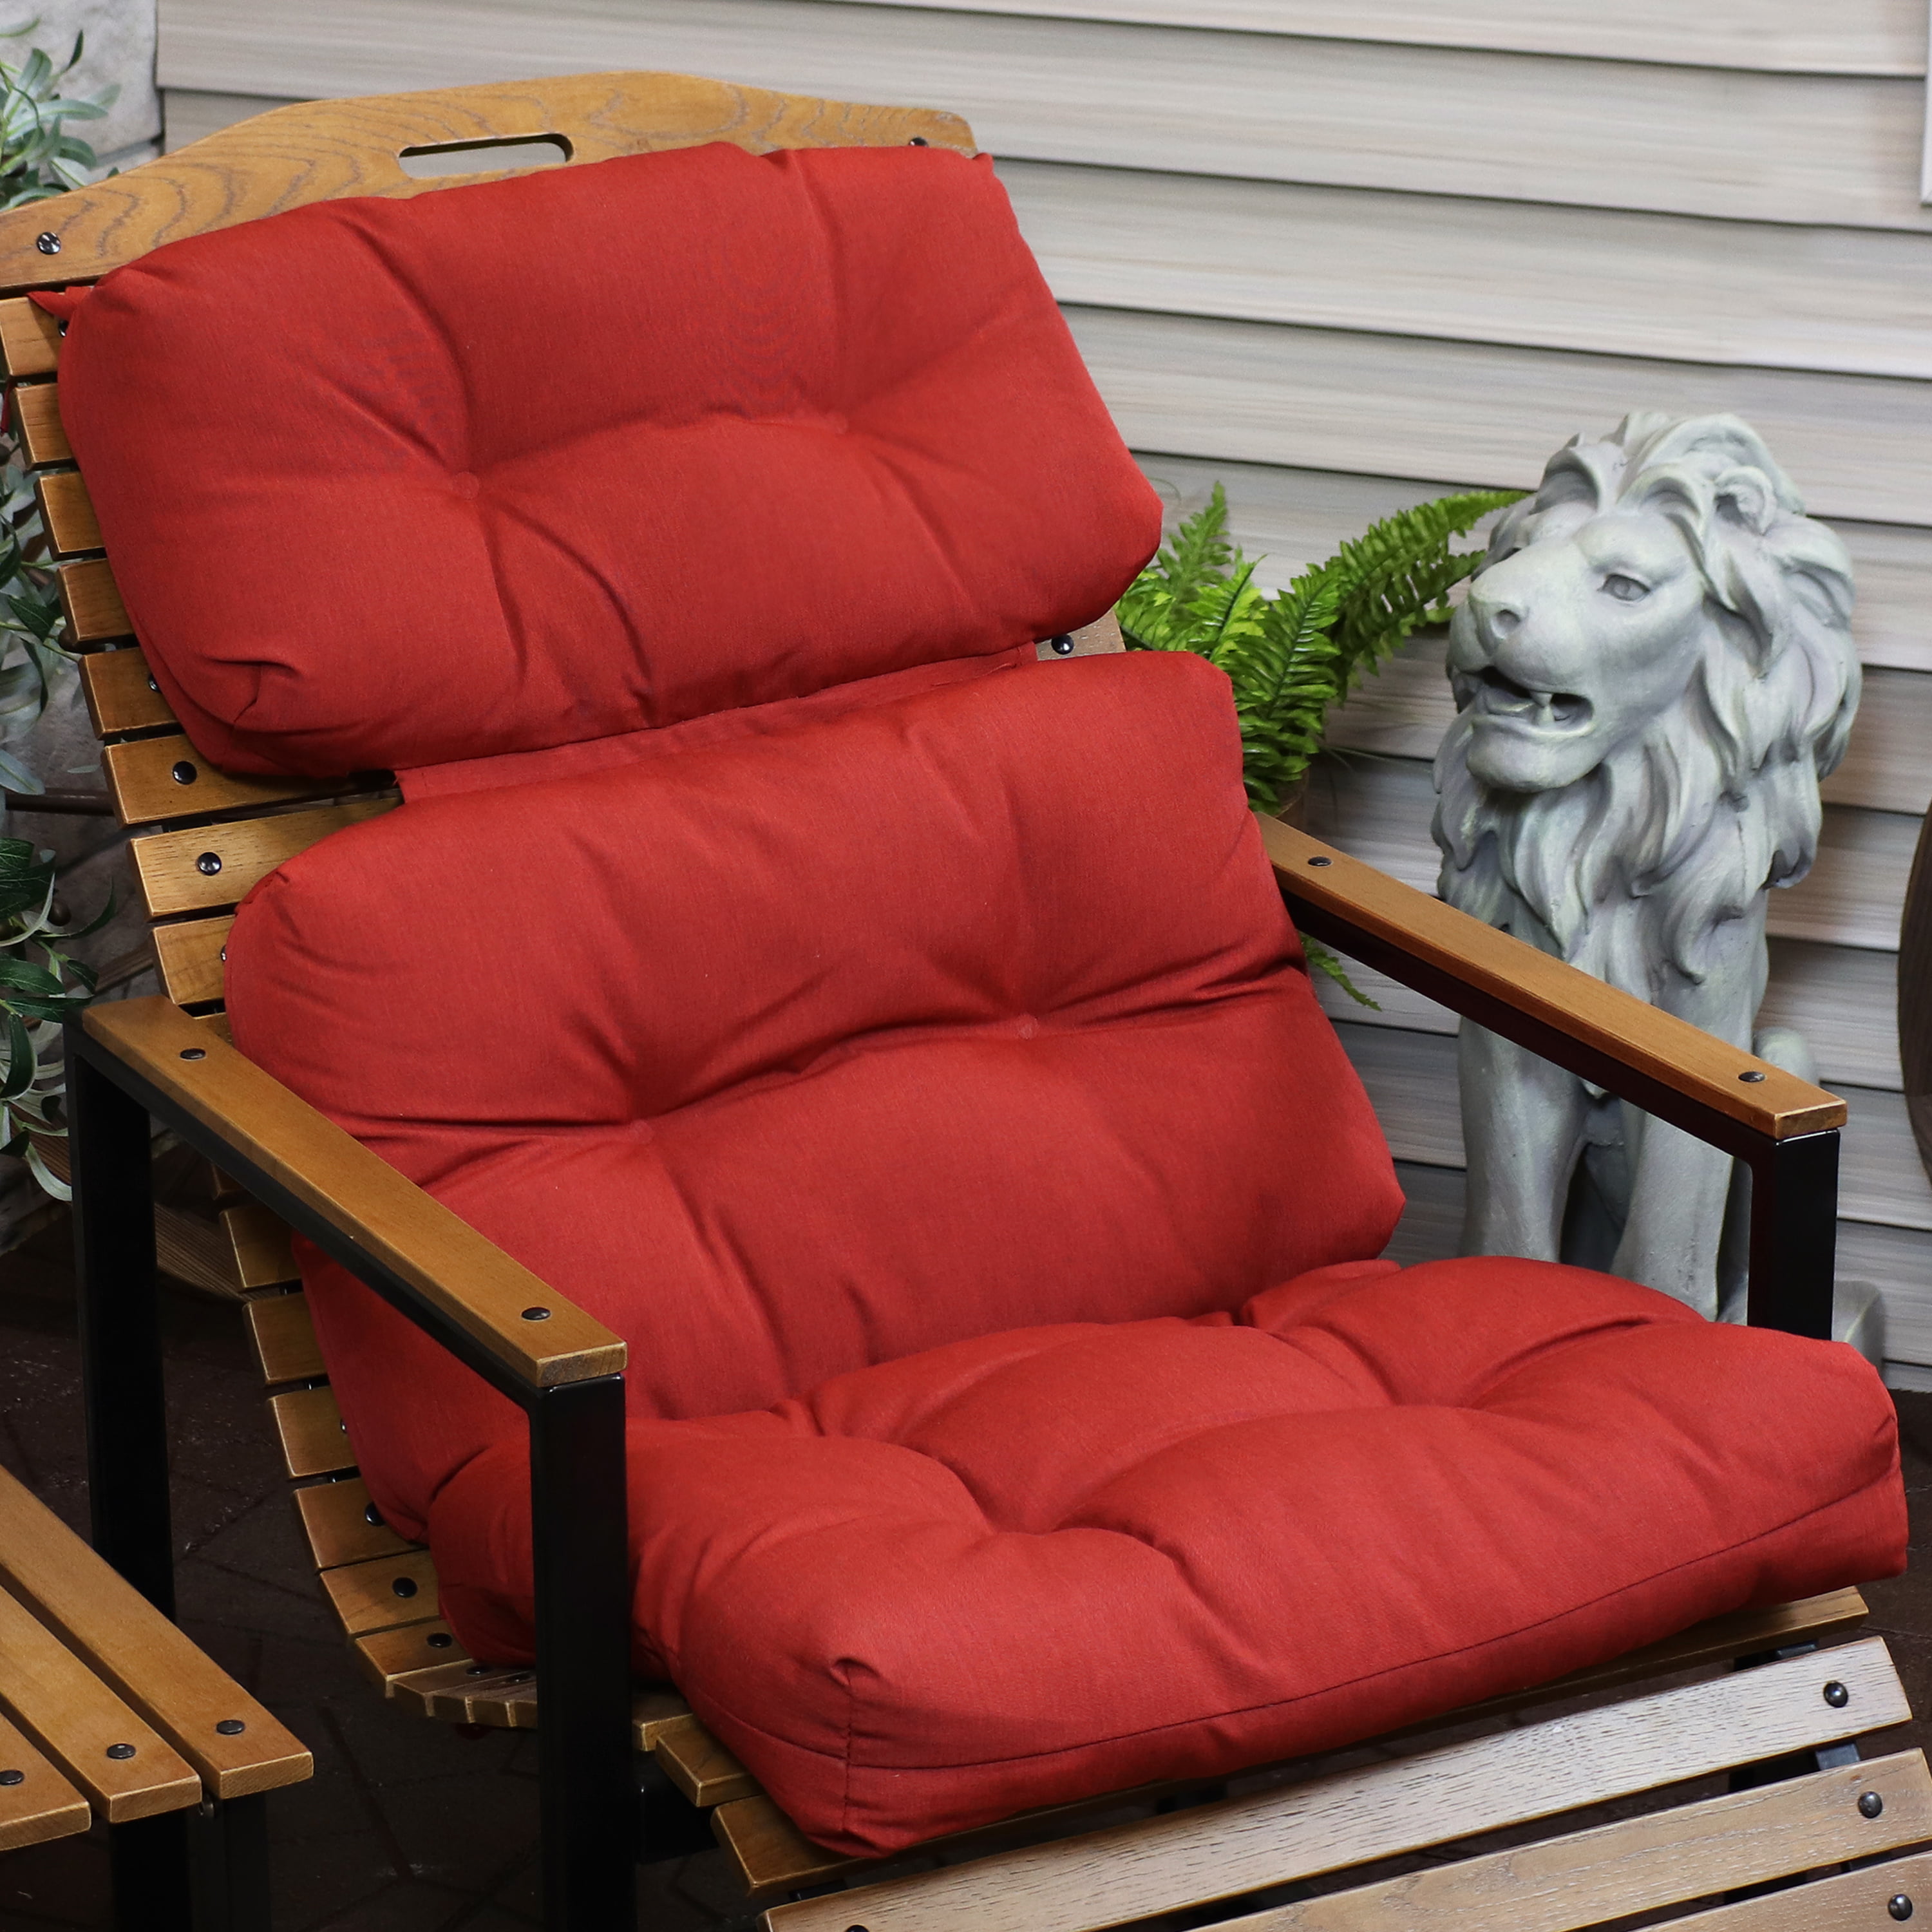 Blue Sunnydaze Olefin Tufted Outdoor Chaise Lounge Chair Cushion 